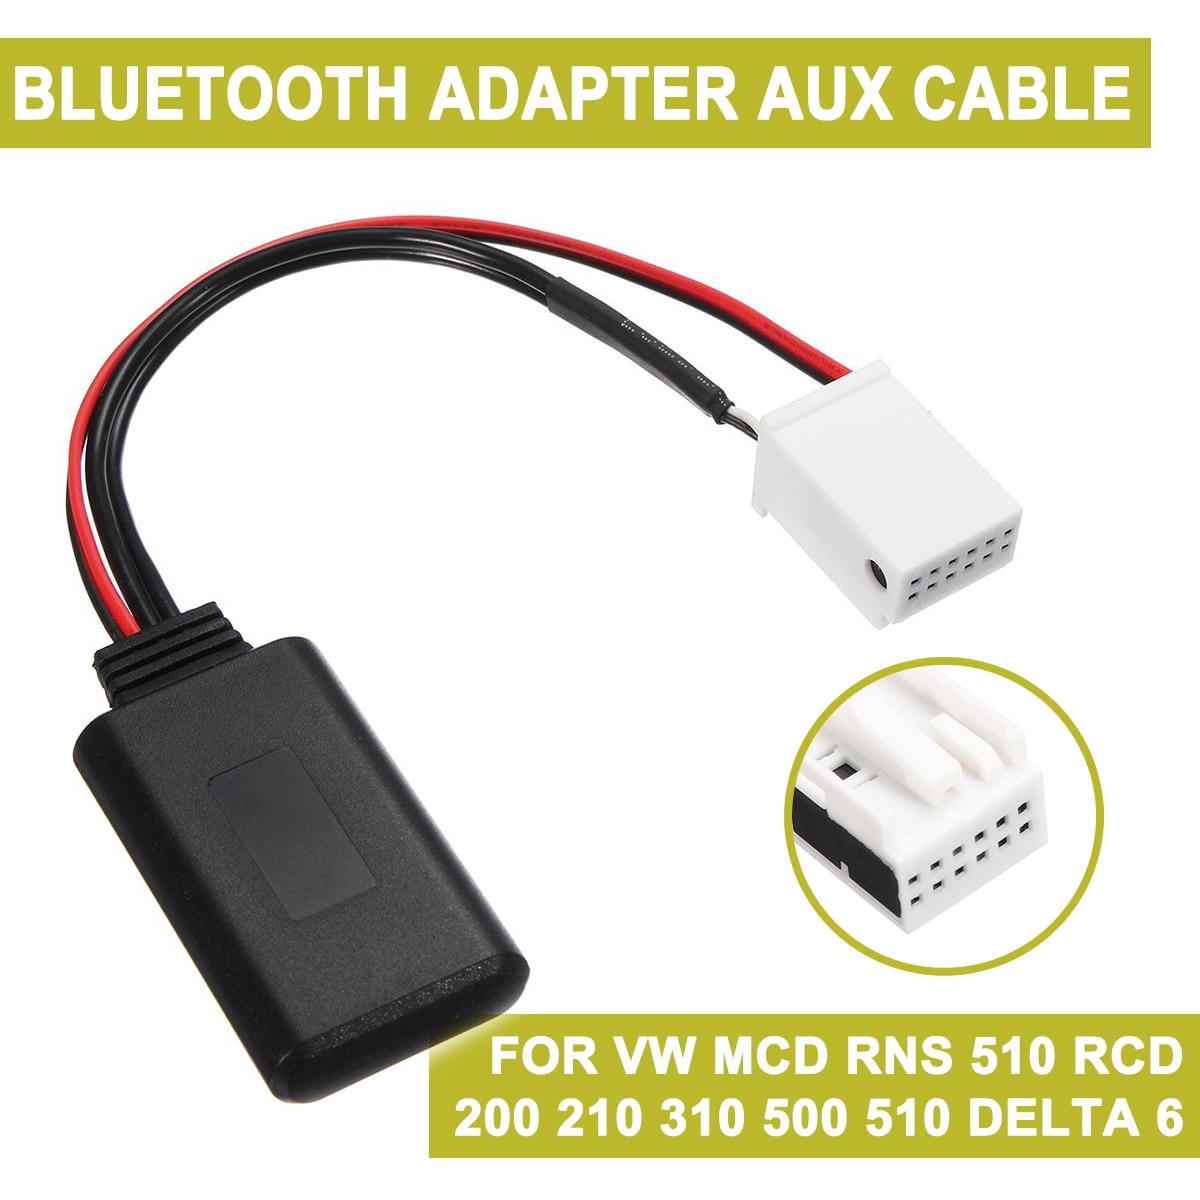 Bluetooth Audio Adapter Kabel Voor Vw Mcd Rns 510 Rcd 200 210 310 500 510 Delta 6 Auto Elektronica Accessoires